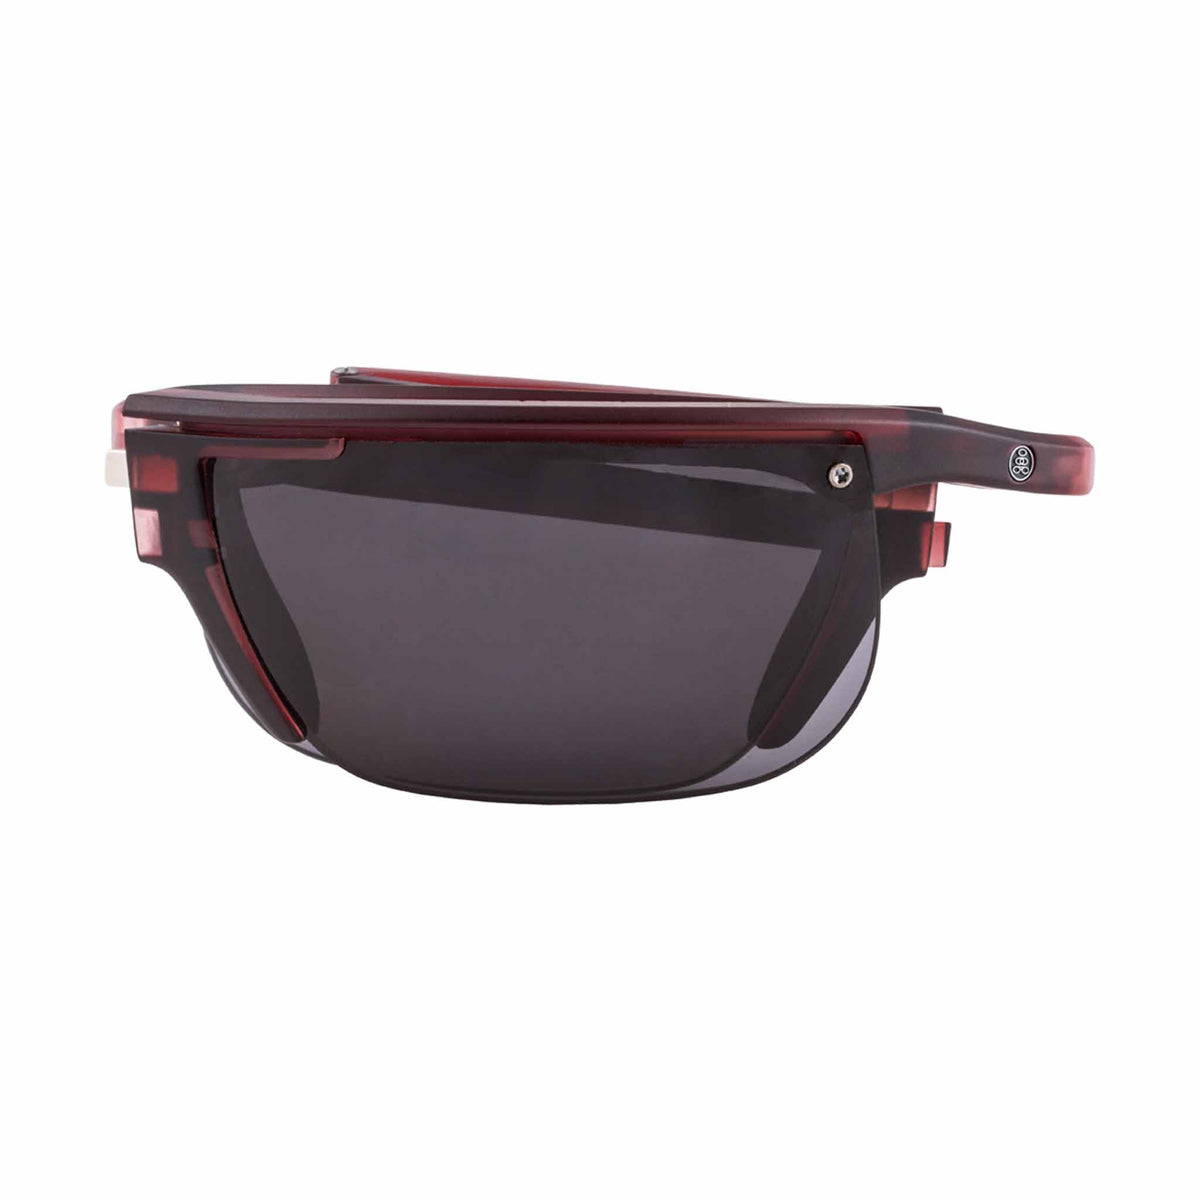 Popticals, Premium Compact Sunglasses, PopArt, 020030-WYGP, Polarized Sunglasses, Matte Wine Crystal, Gray Lenses, Compact View